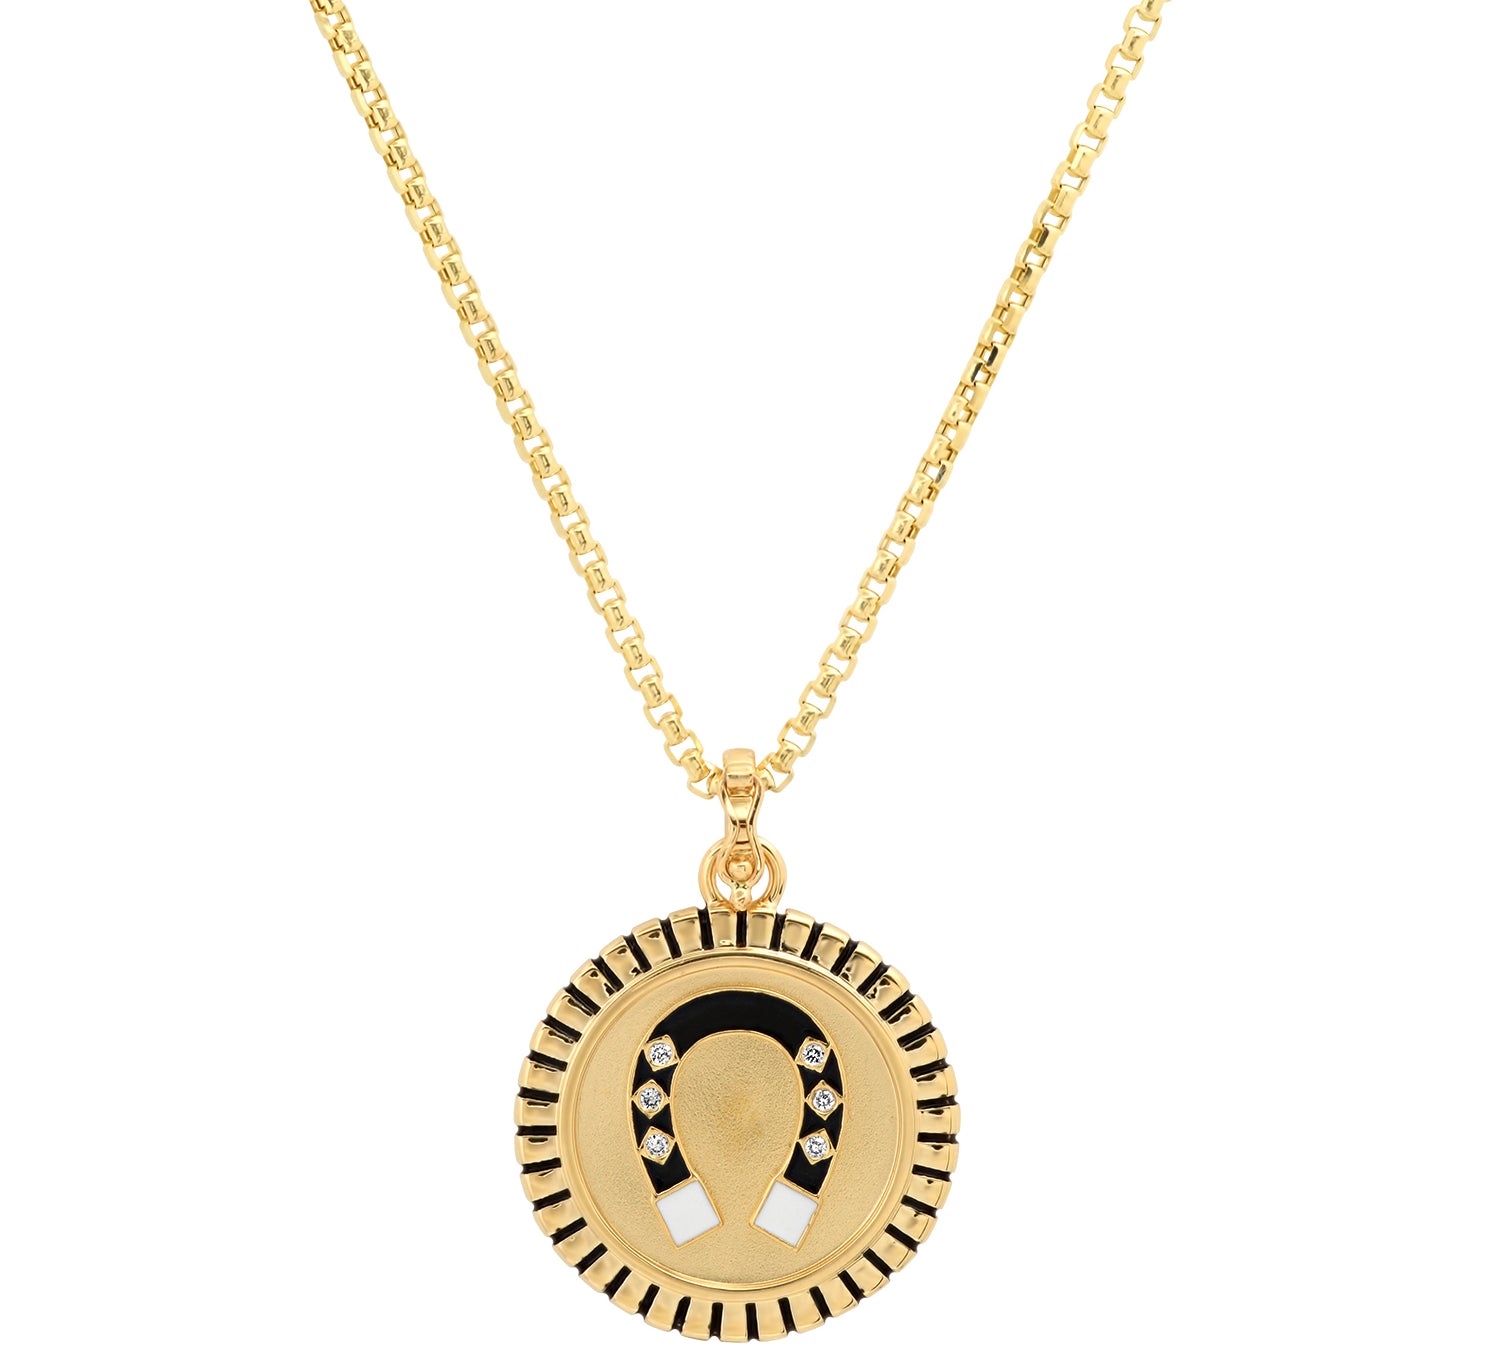 Horseshoe Gold Pendant Necklace Pendant Helena Rose Jewelry 16" Chain  